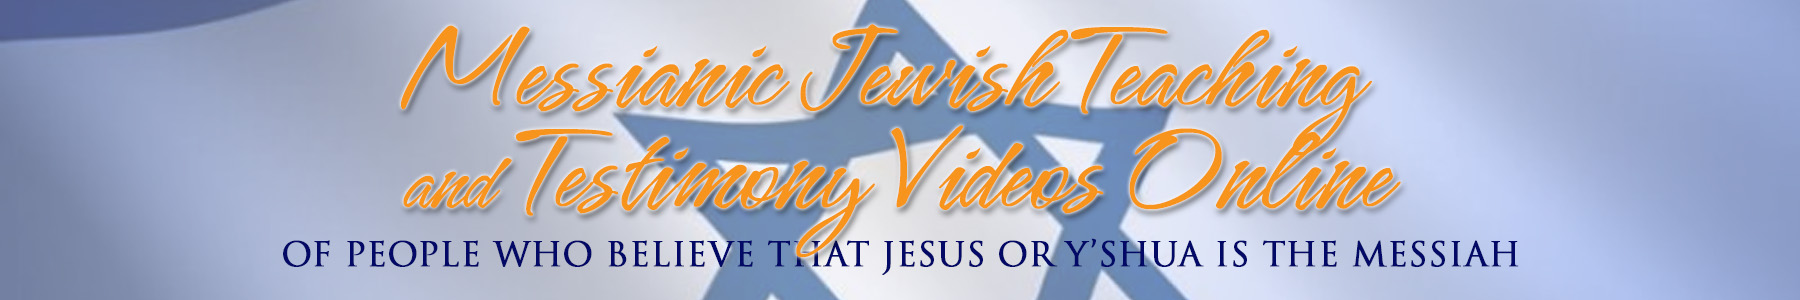 Jesus For Jews Videos